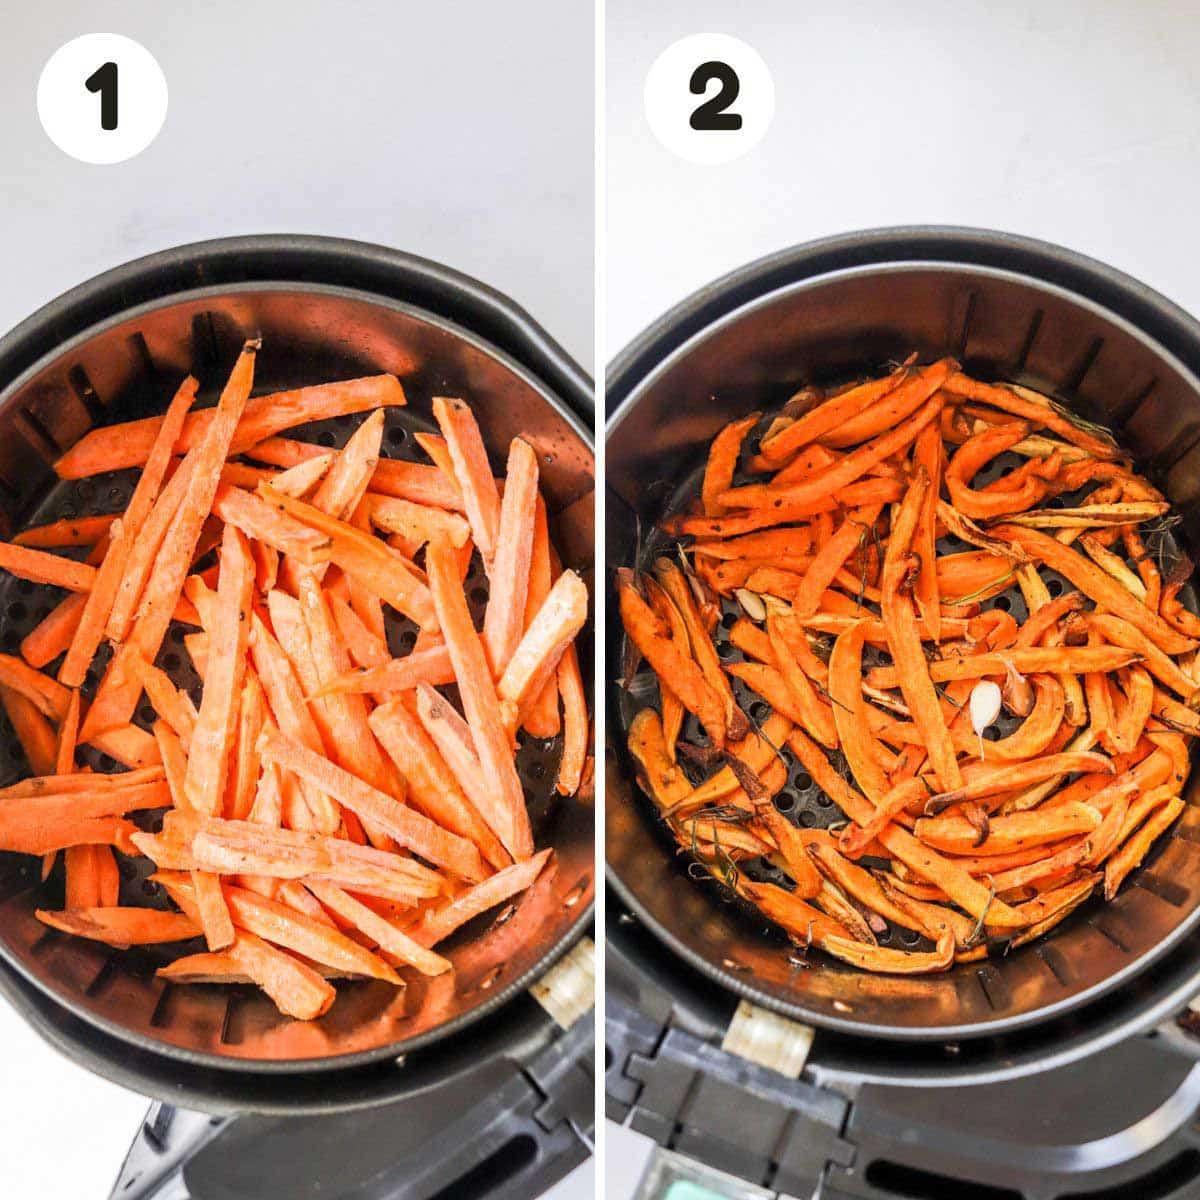 Steps to make the sweet potato fries.